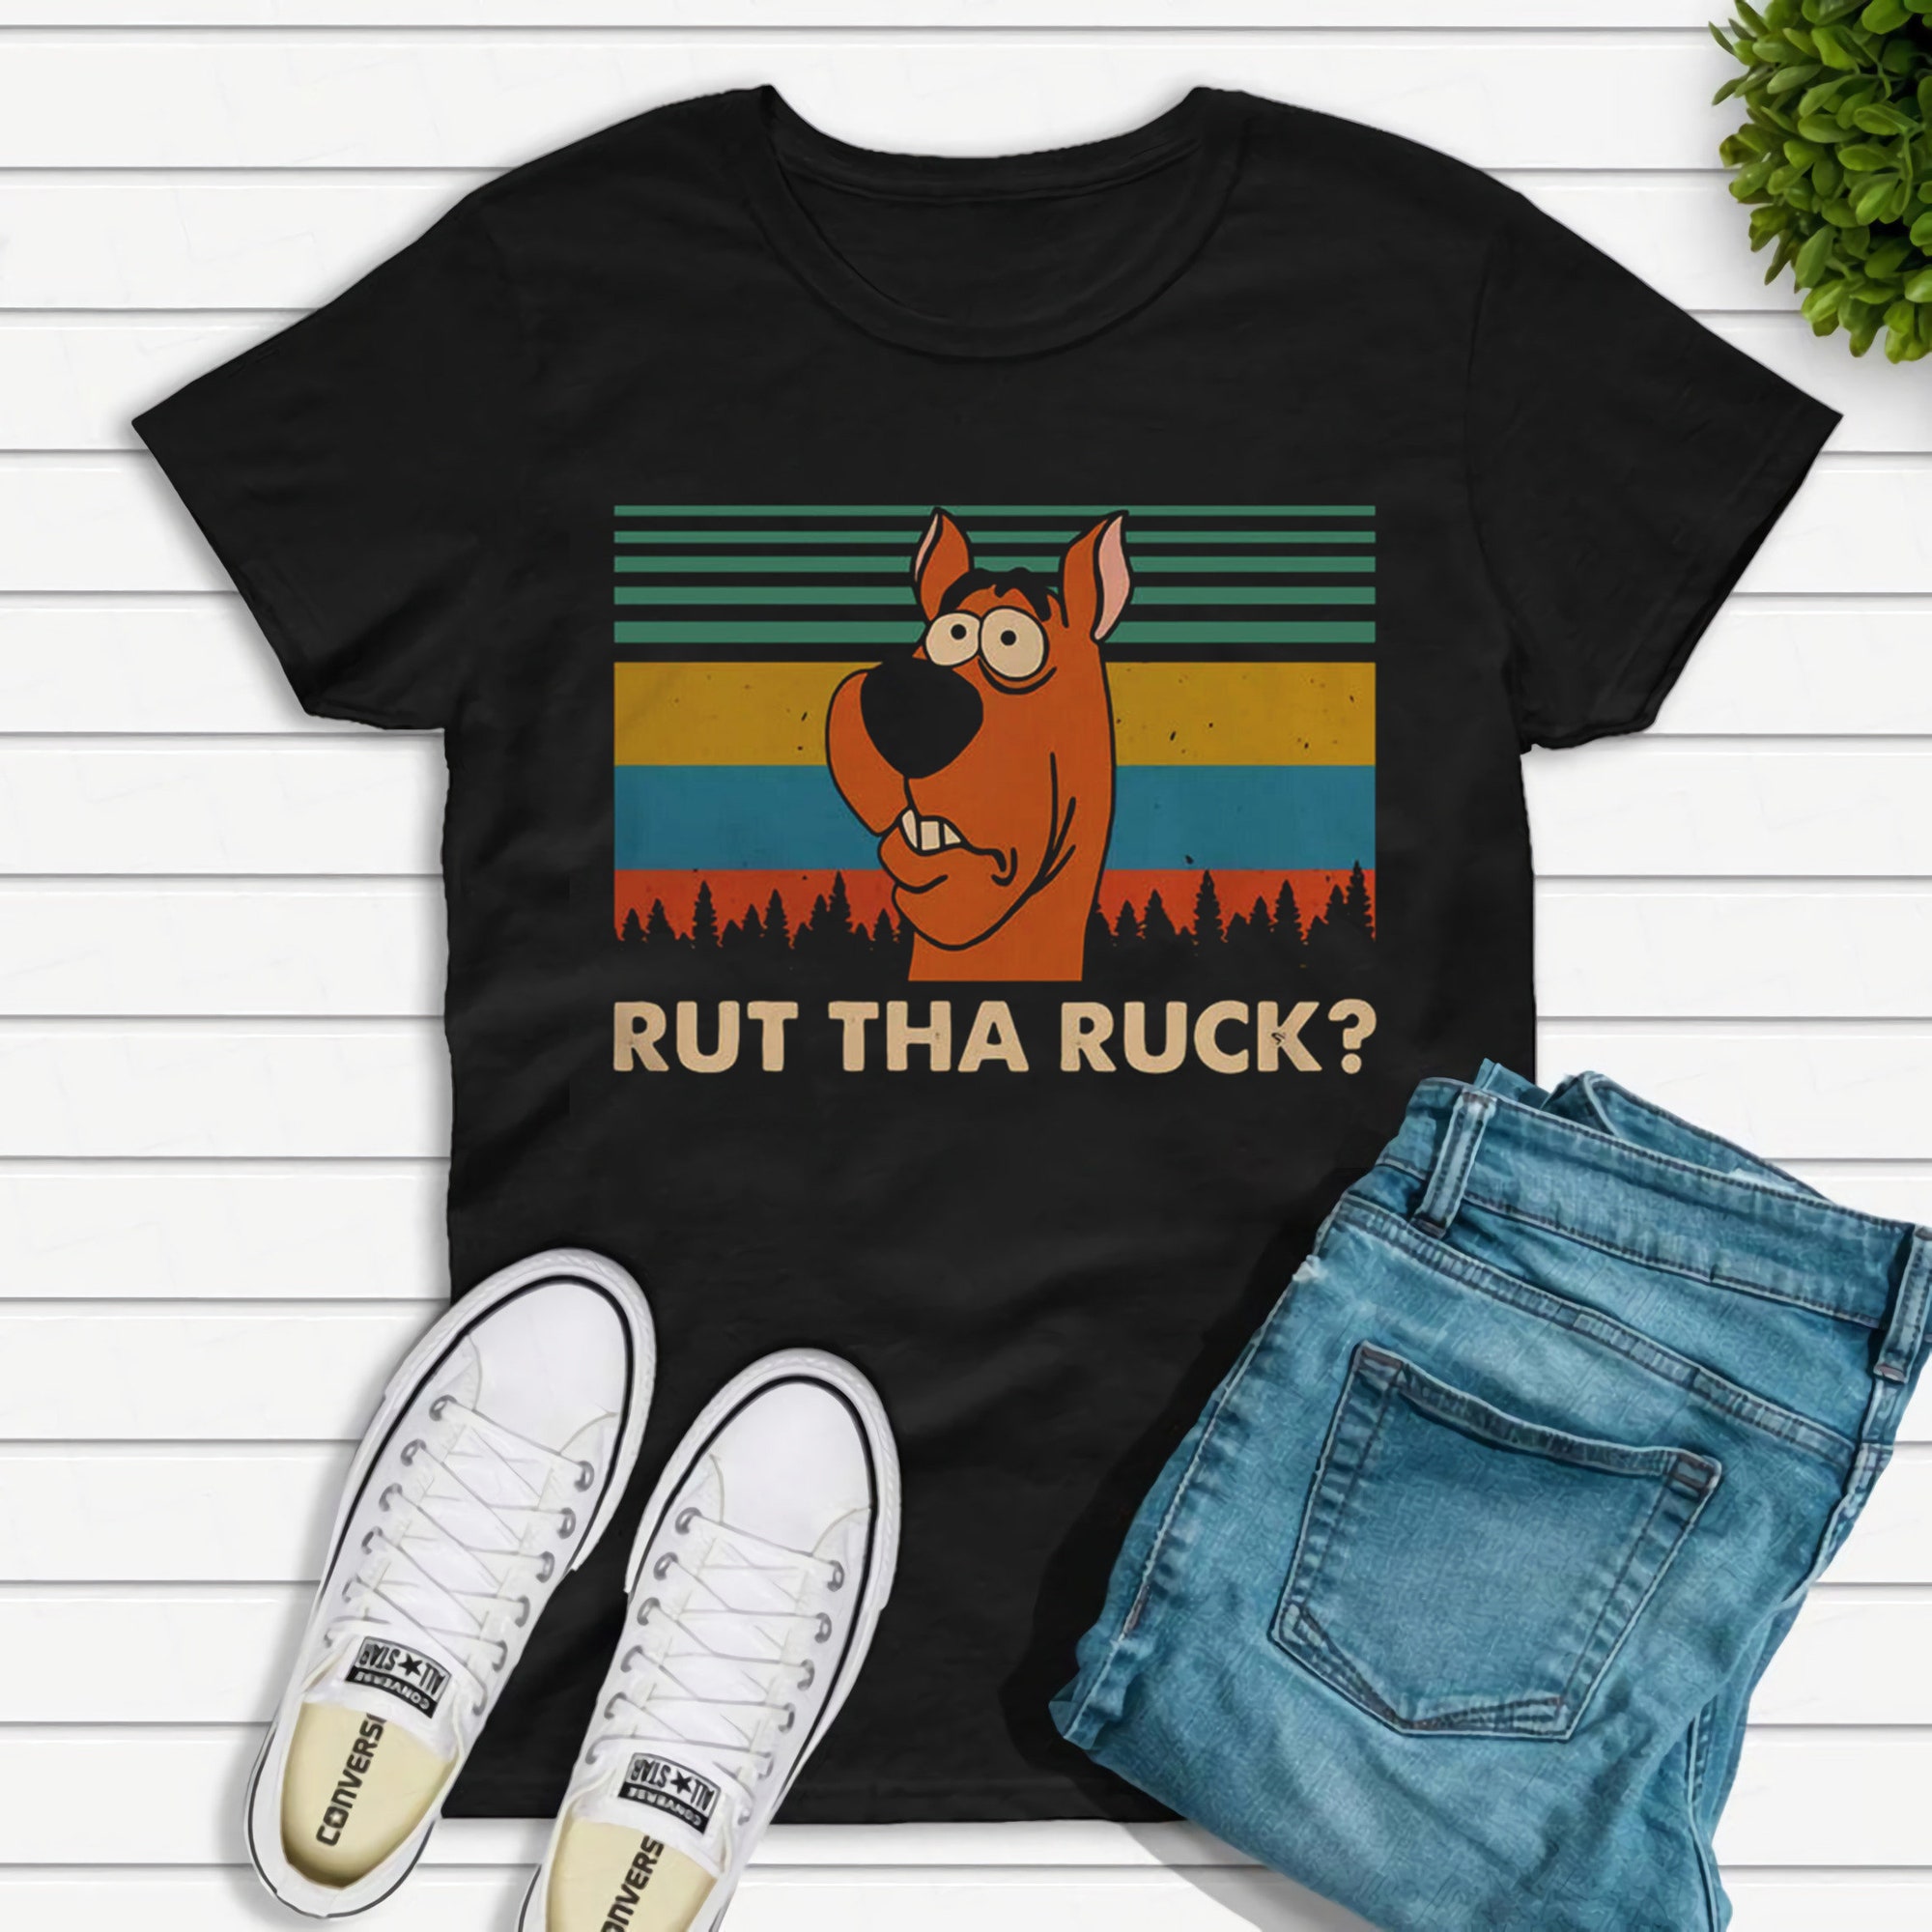 Discover Scooby Doo Rut Tha Ruck Funny Dog Vintage Retro T-Shirt, Scooby Doo Shirt Cartoon Funny, Scoobydo Shirt